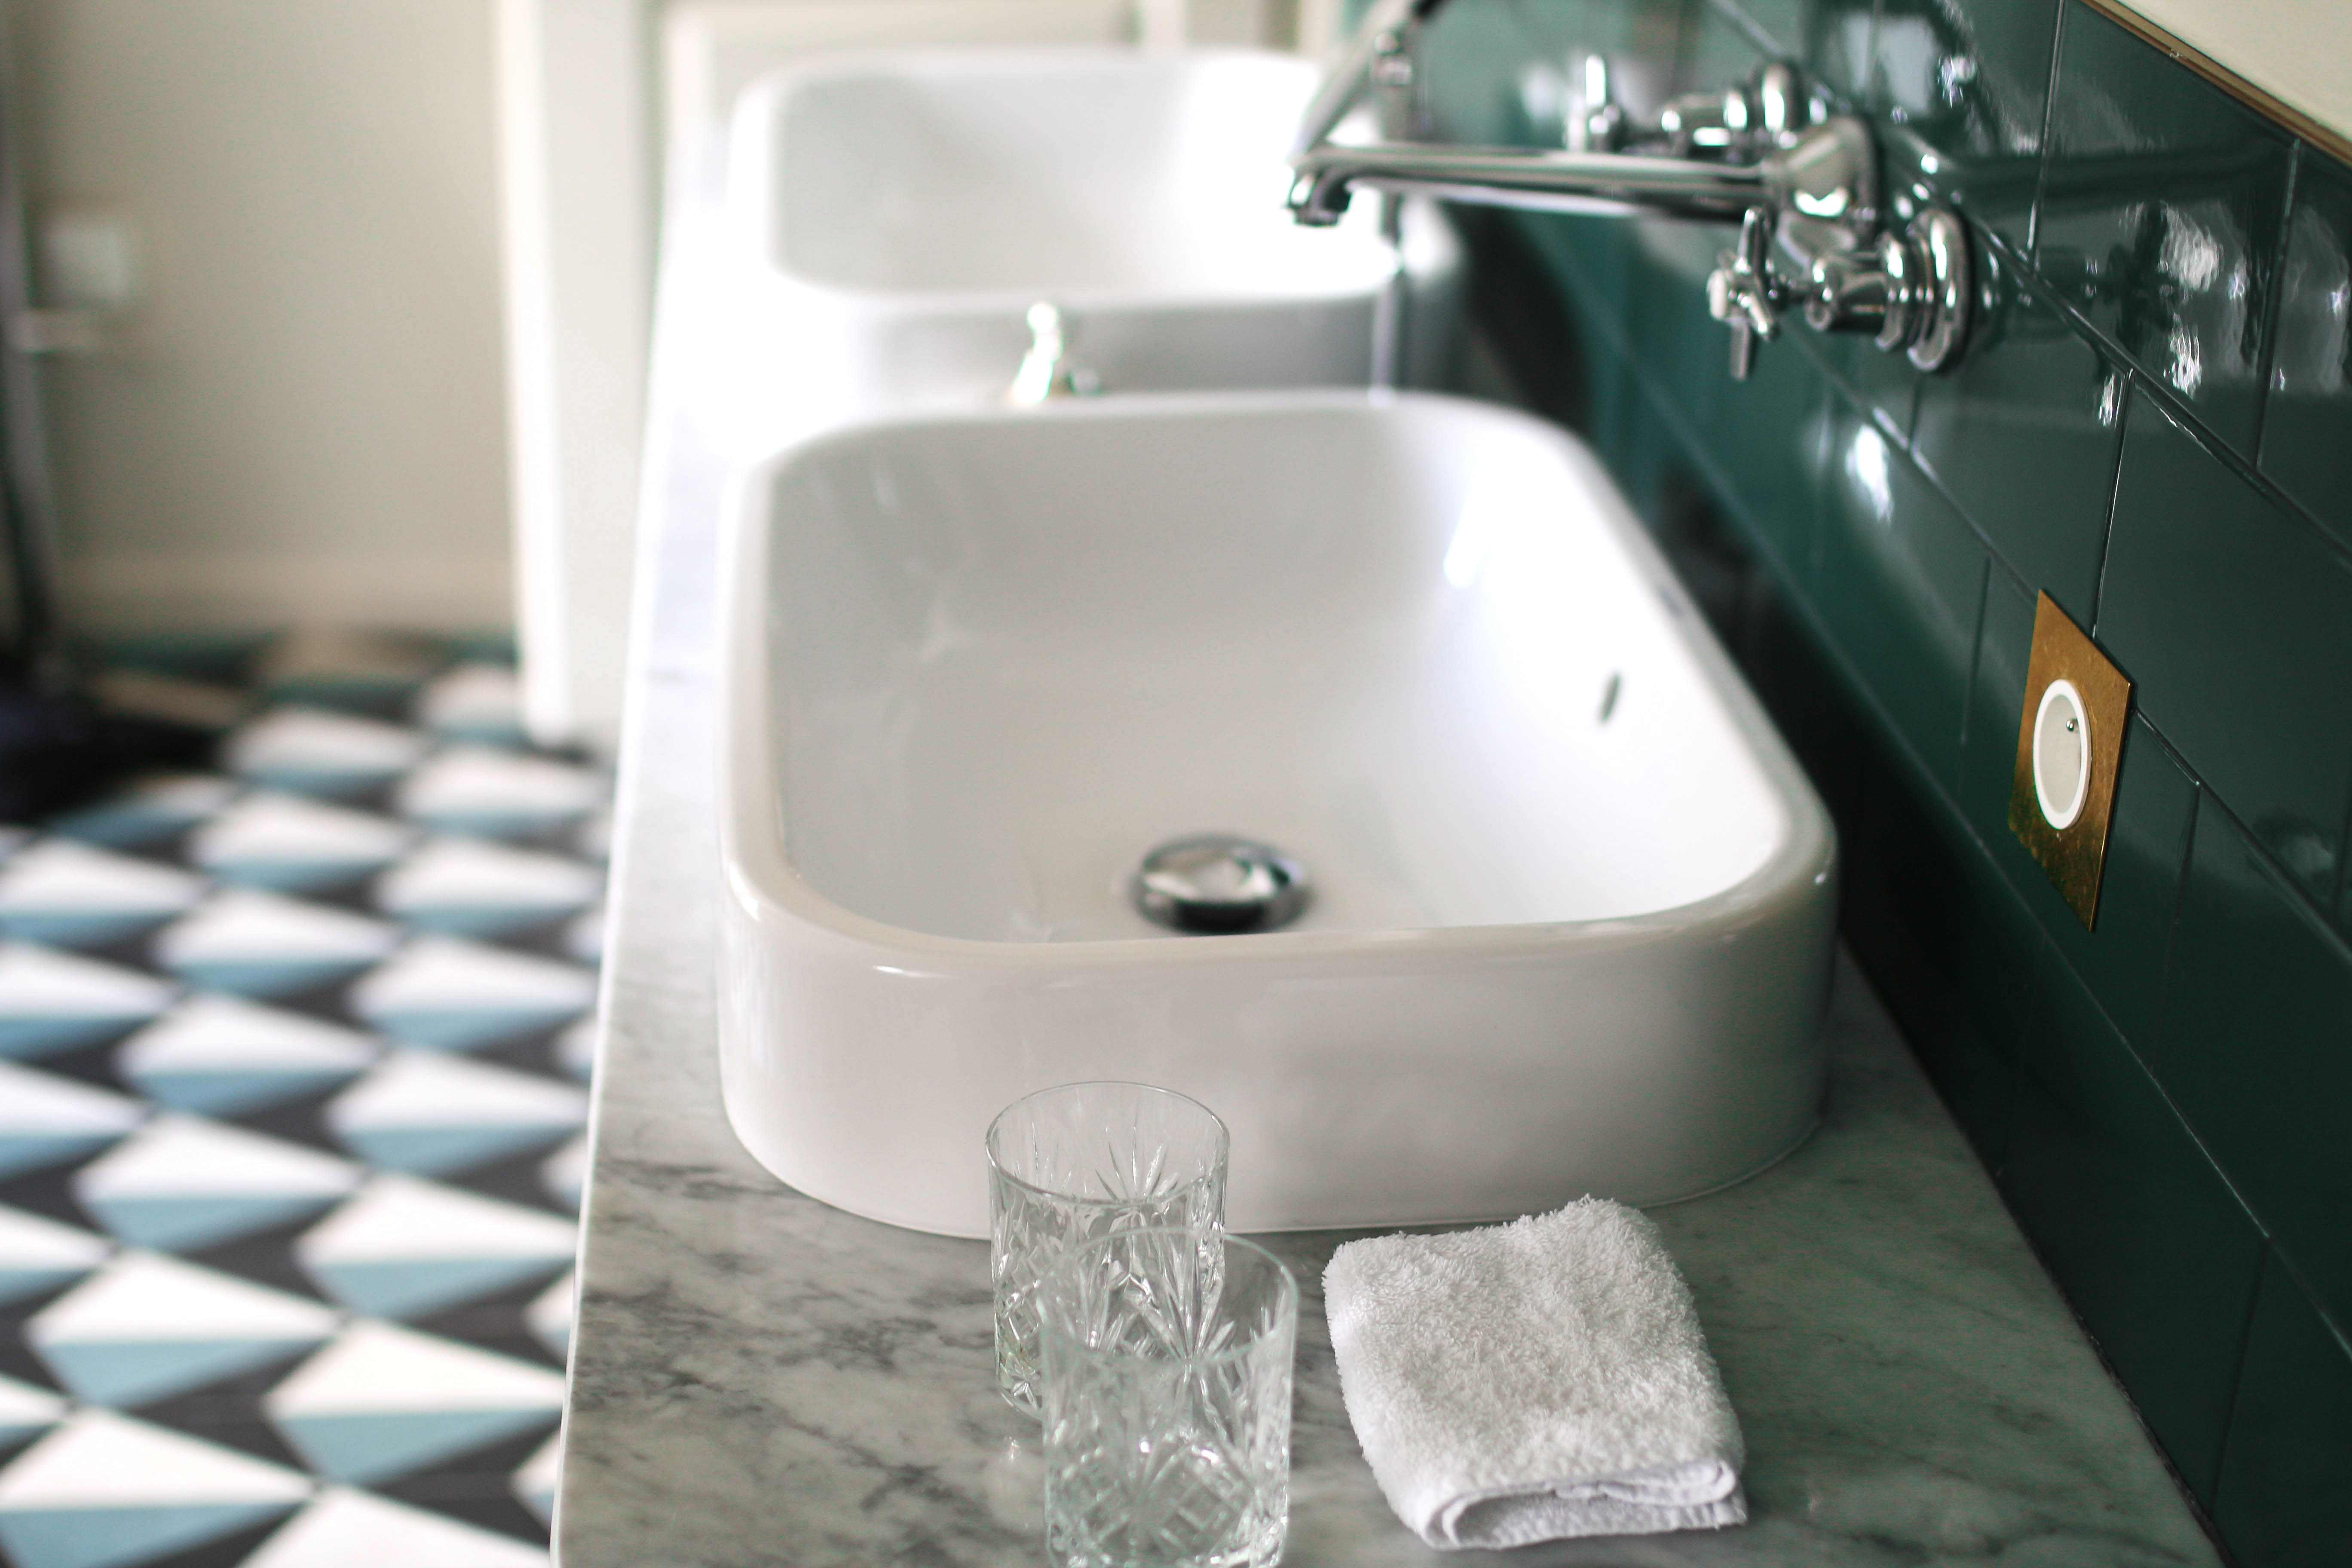 grand pigalle hotel paris review blog bathroom marble